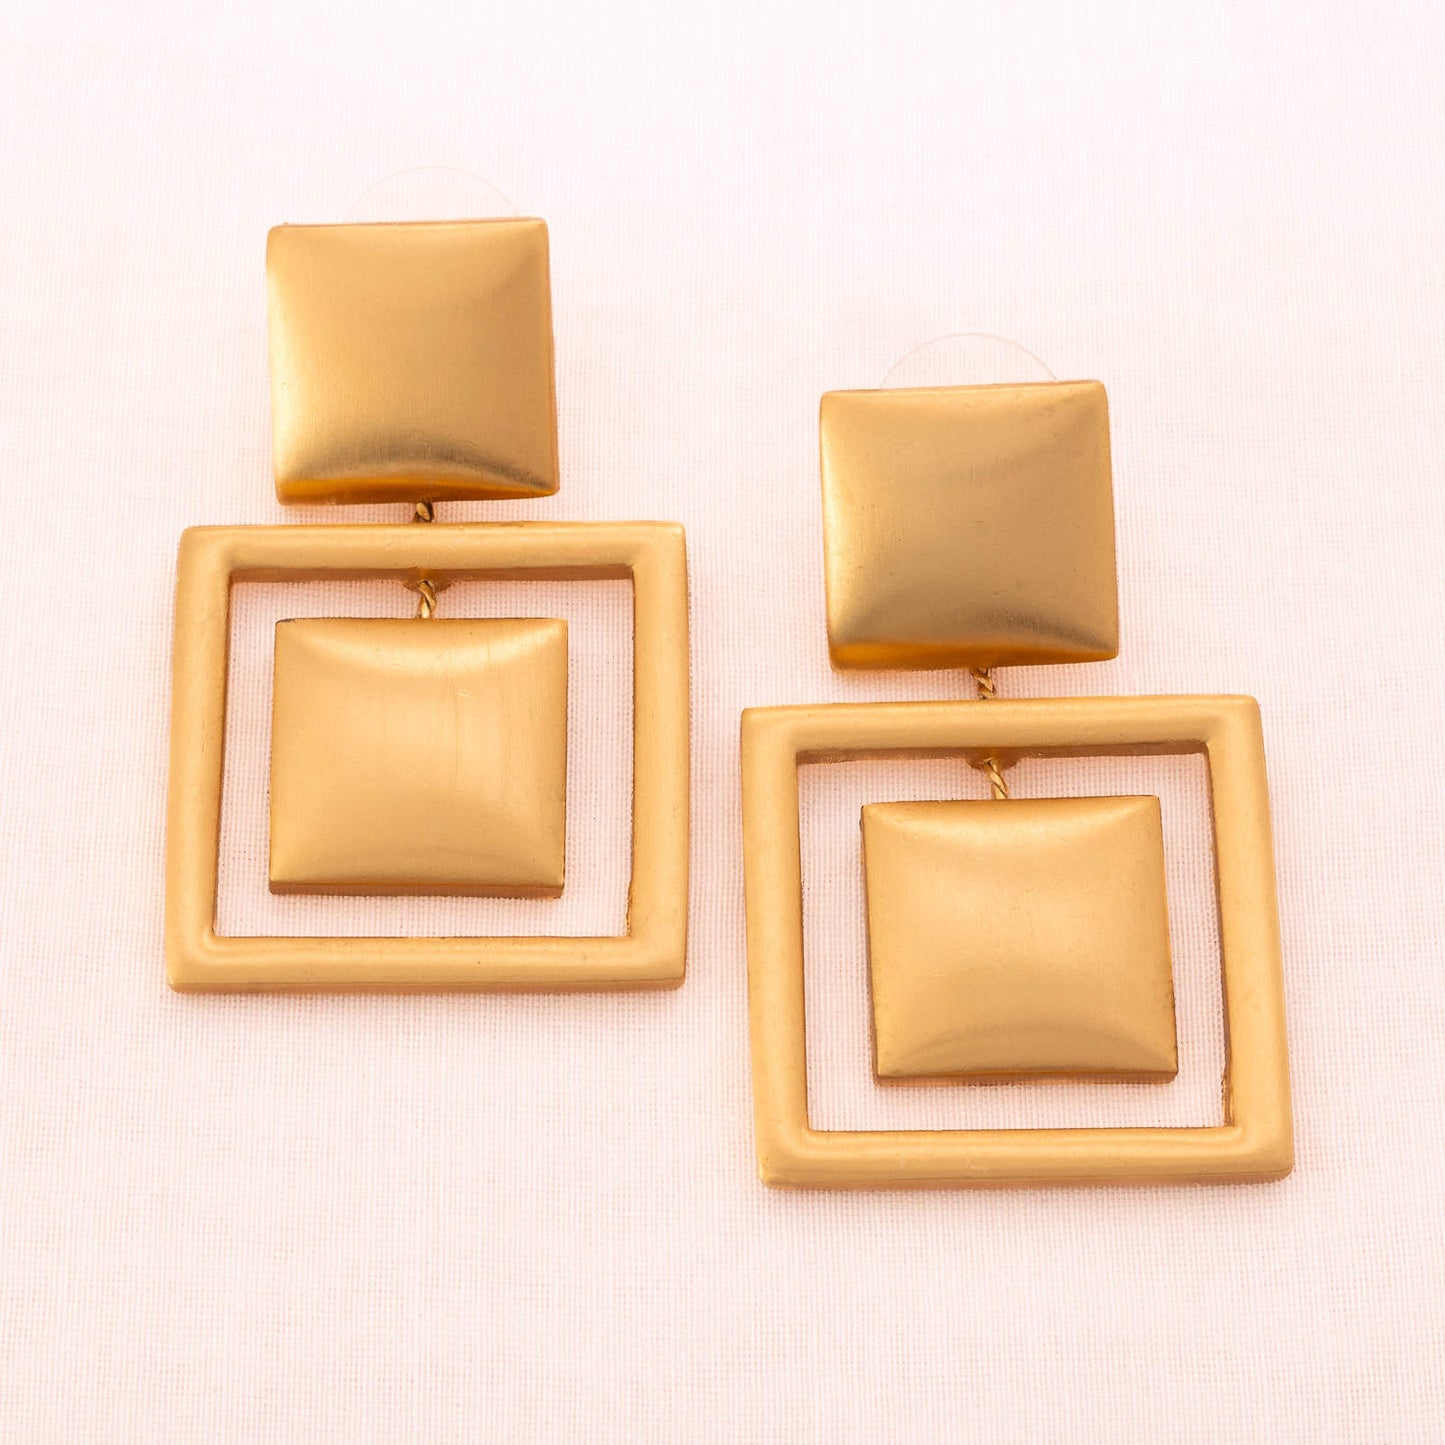 ANNE KLEIN matt gold-plated earrings from the 1990s